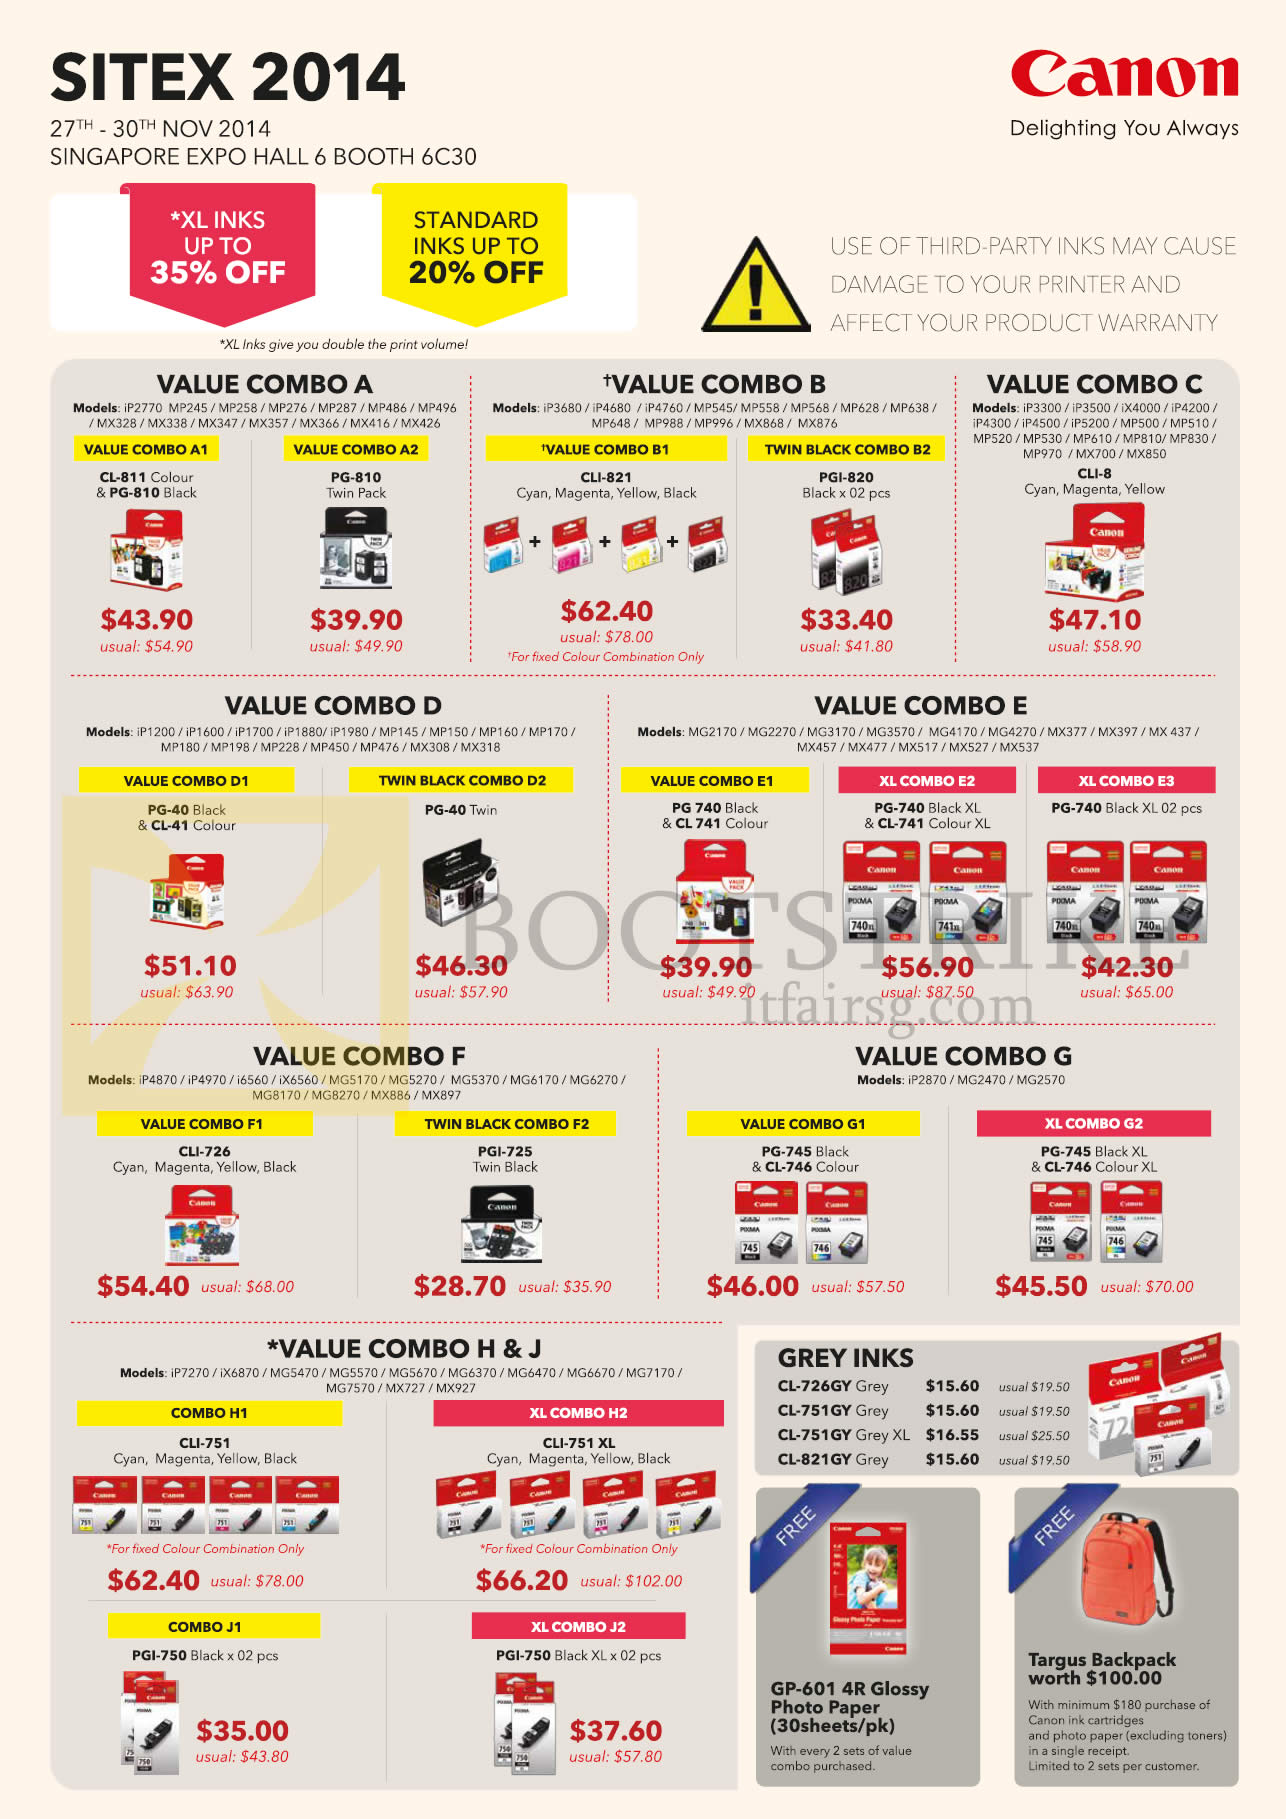 SITEX 2014 price list image brochure of Canon Value Combos A, B, C, D, E, F, G, H, J